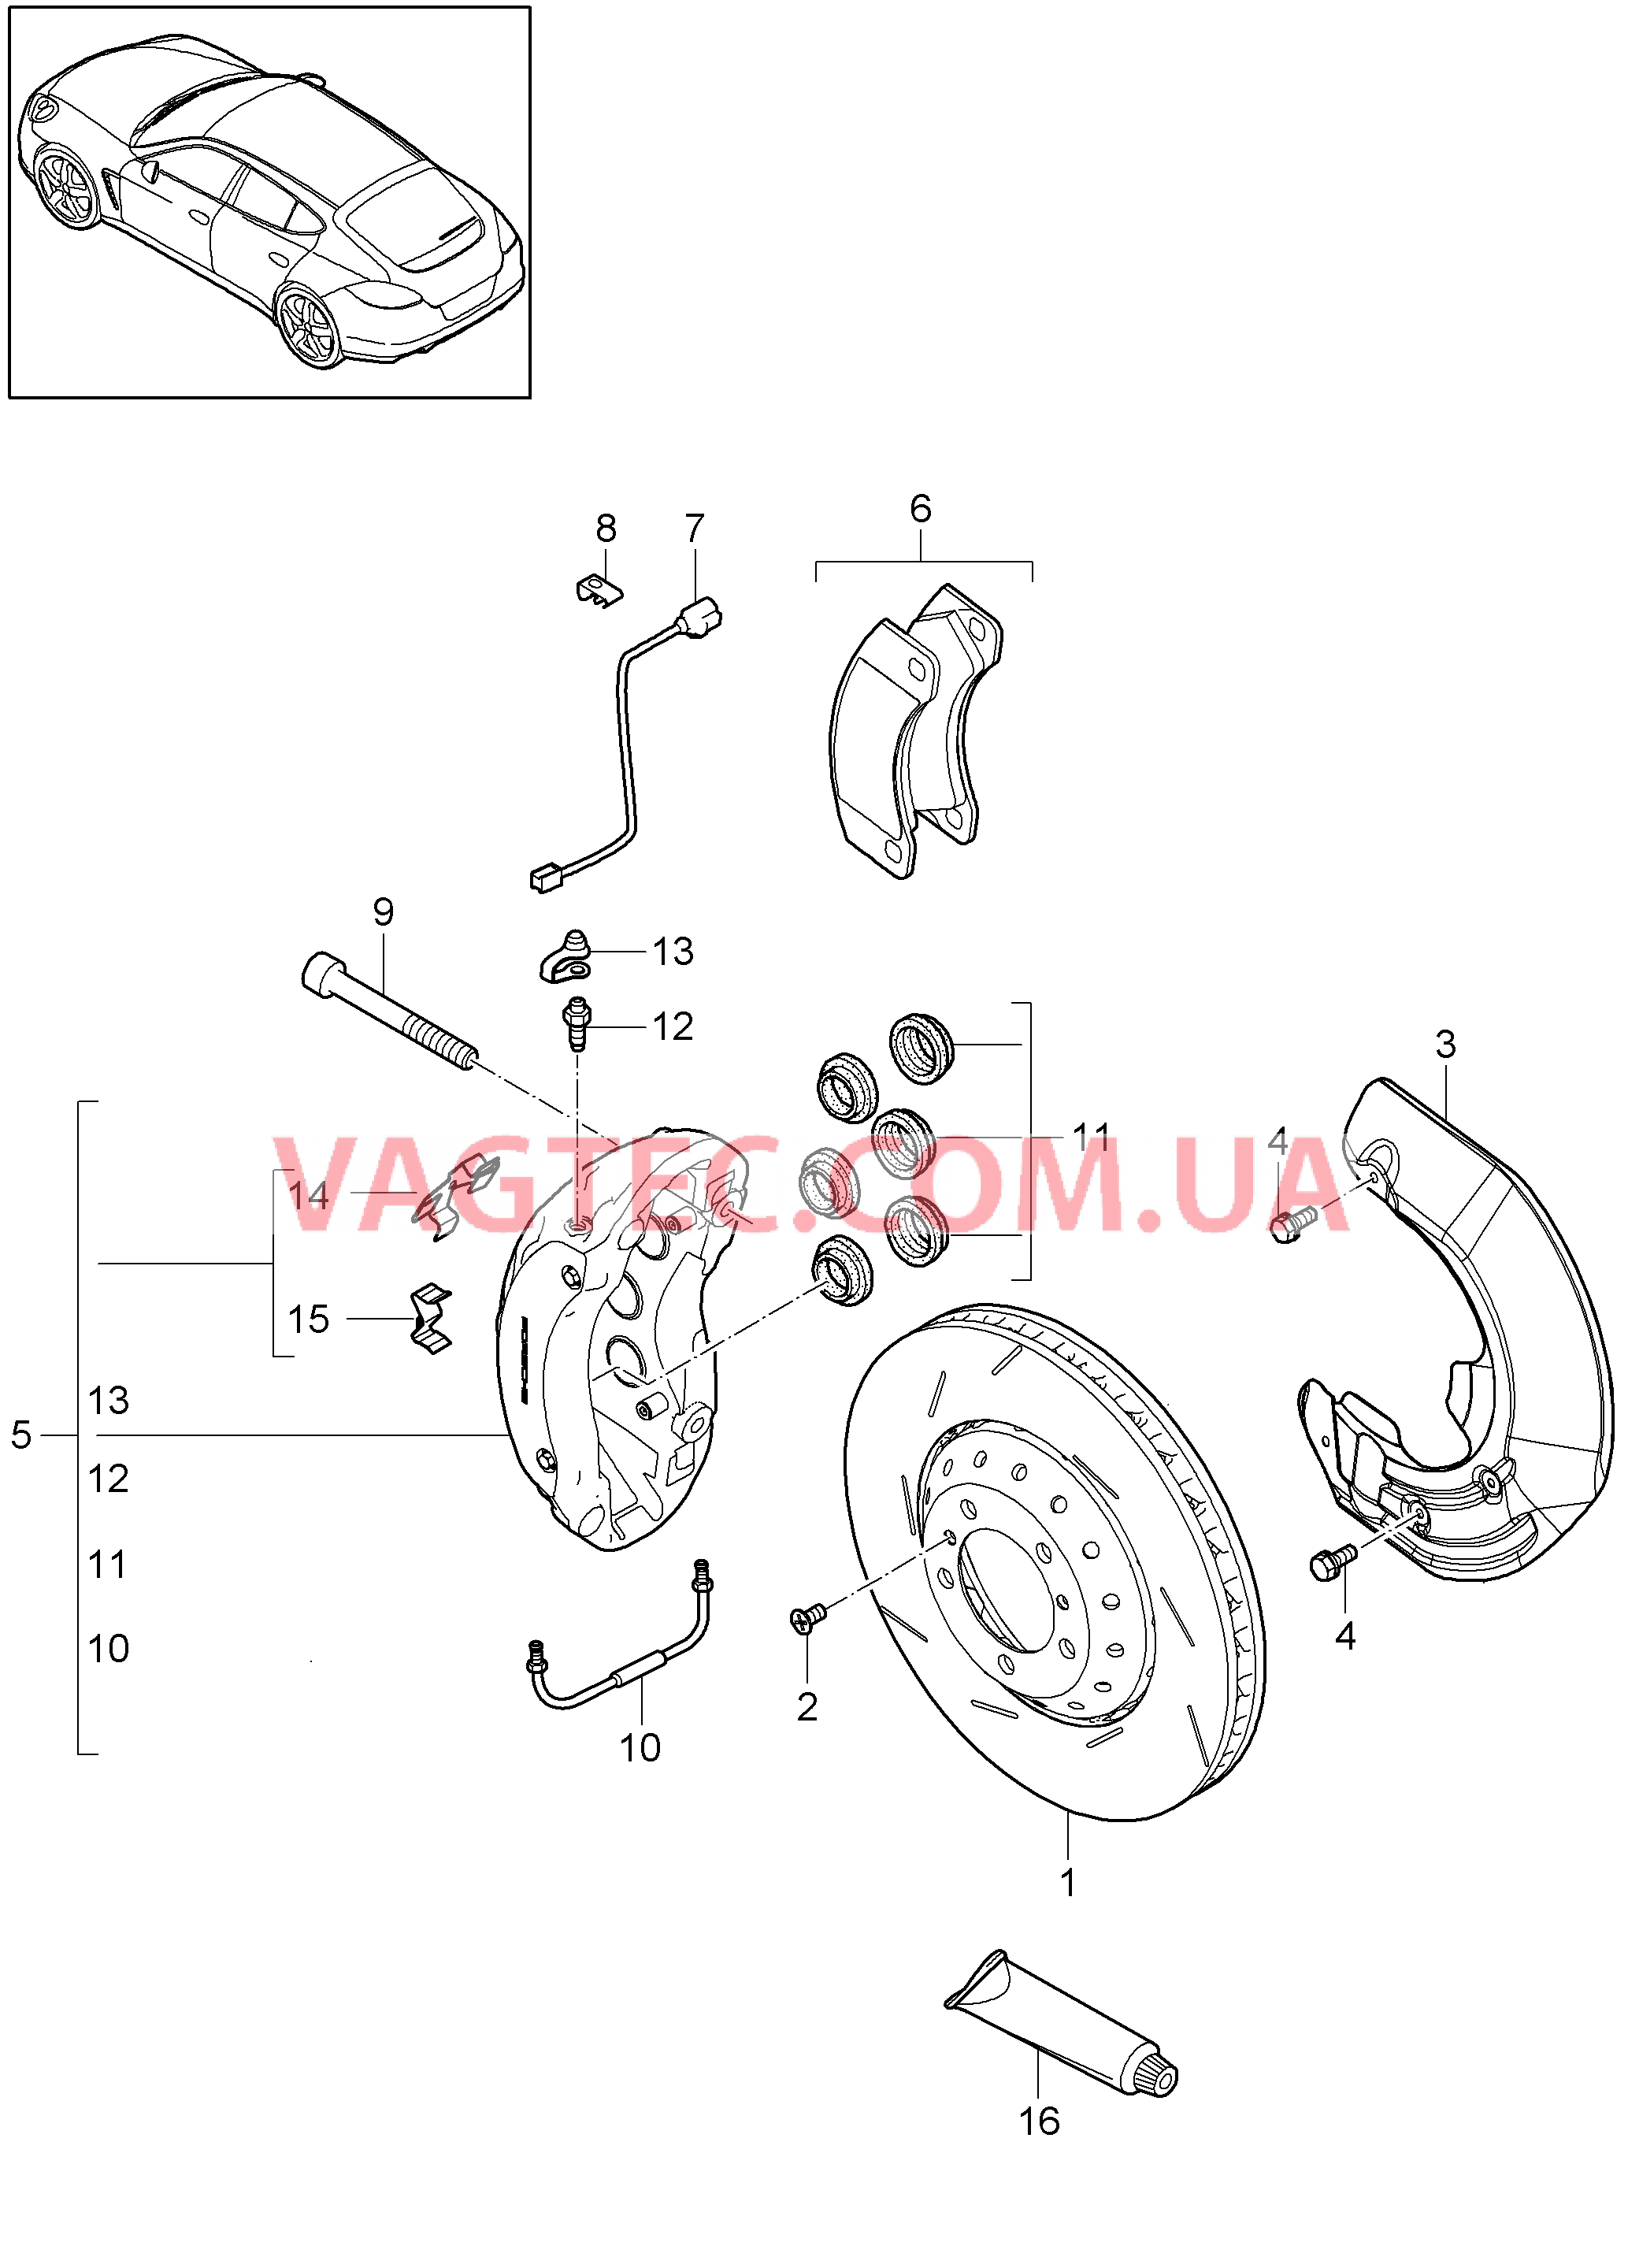 602-002 Дисковой тормоз, Передняя ось
						
						MCW.DA, MCX.PA/RA для PORSCHE Panamera 2010-2016